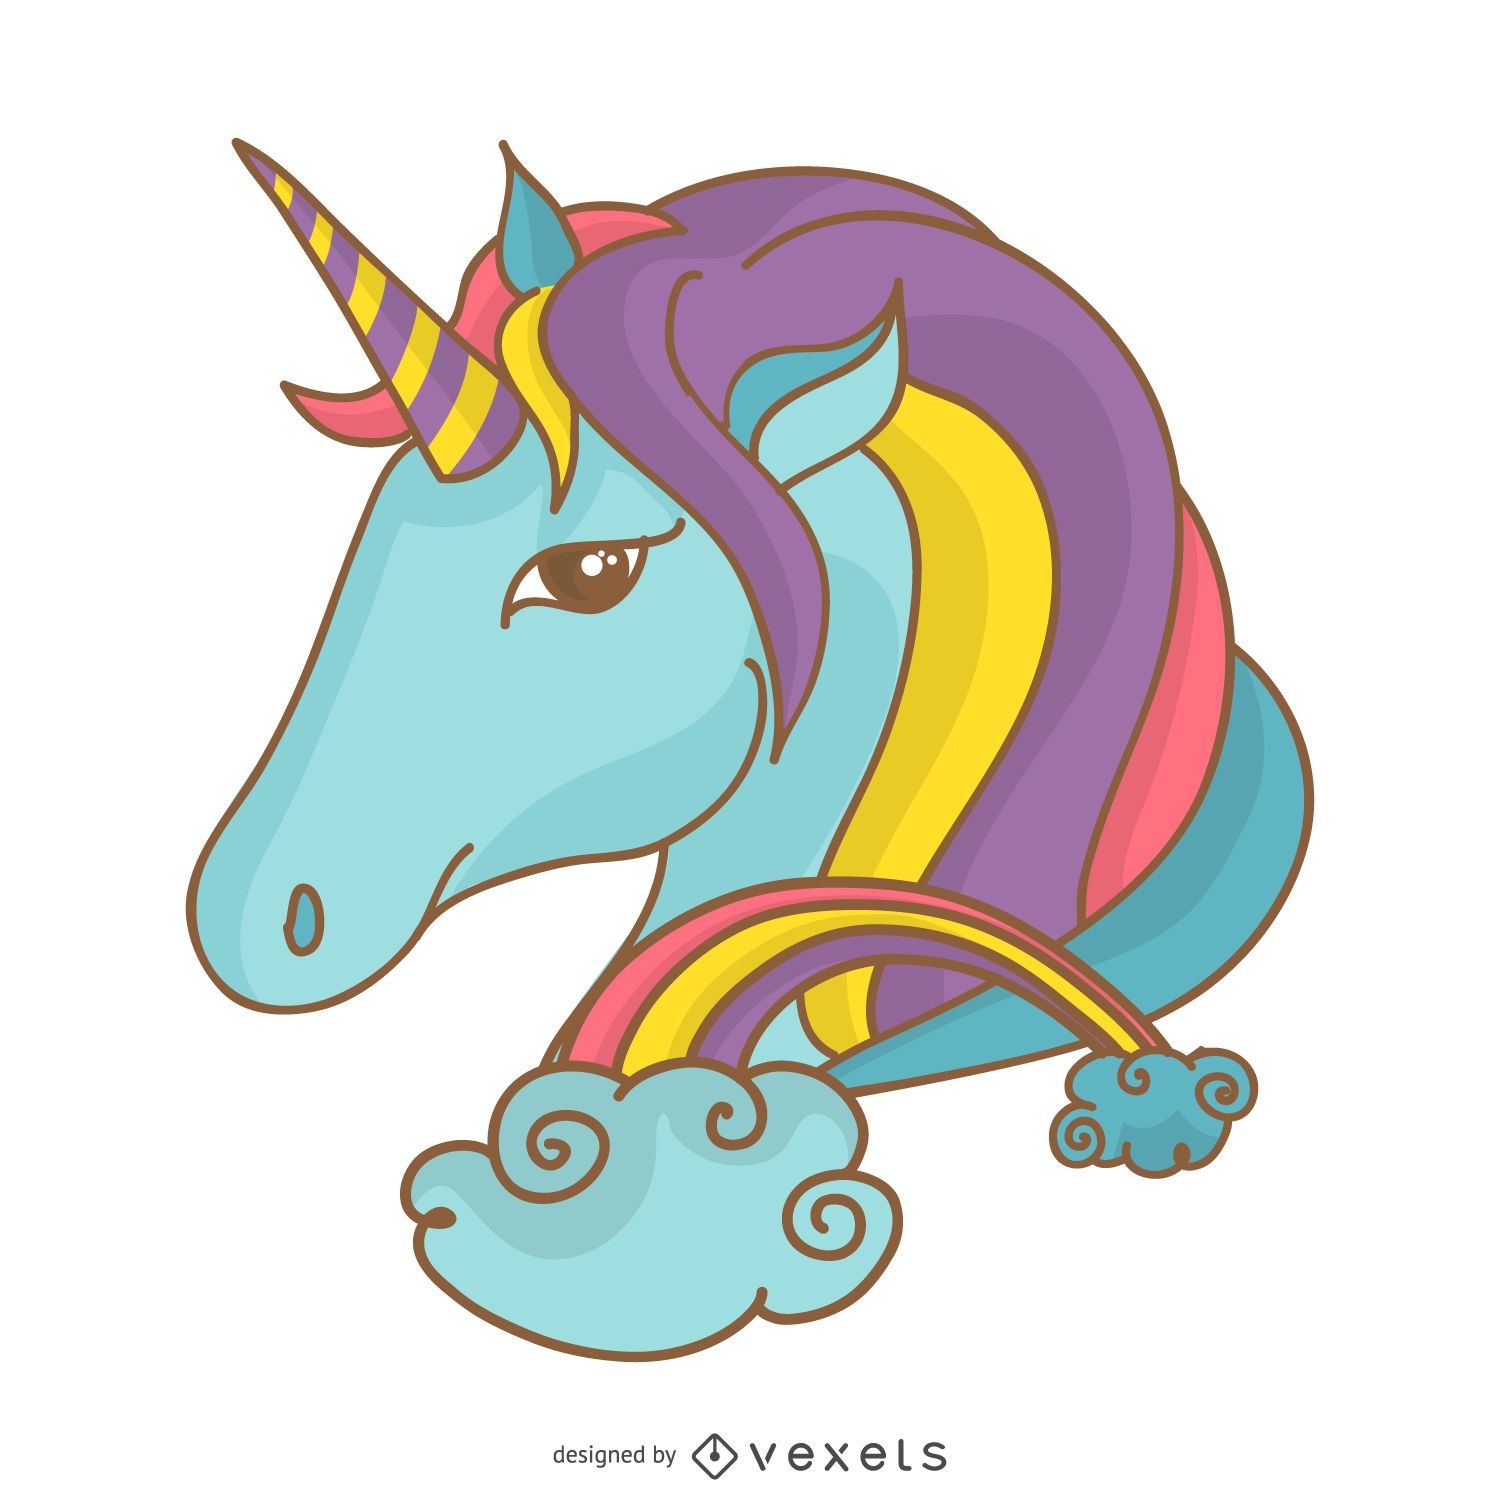 Cute unicorn illustration - Vector download